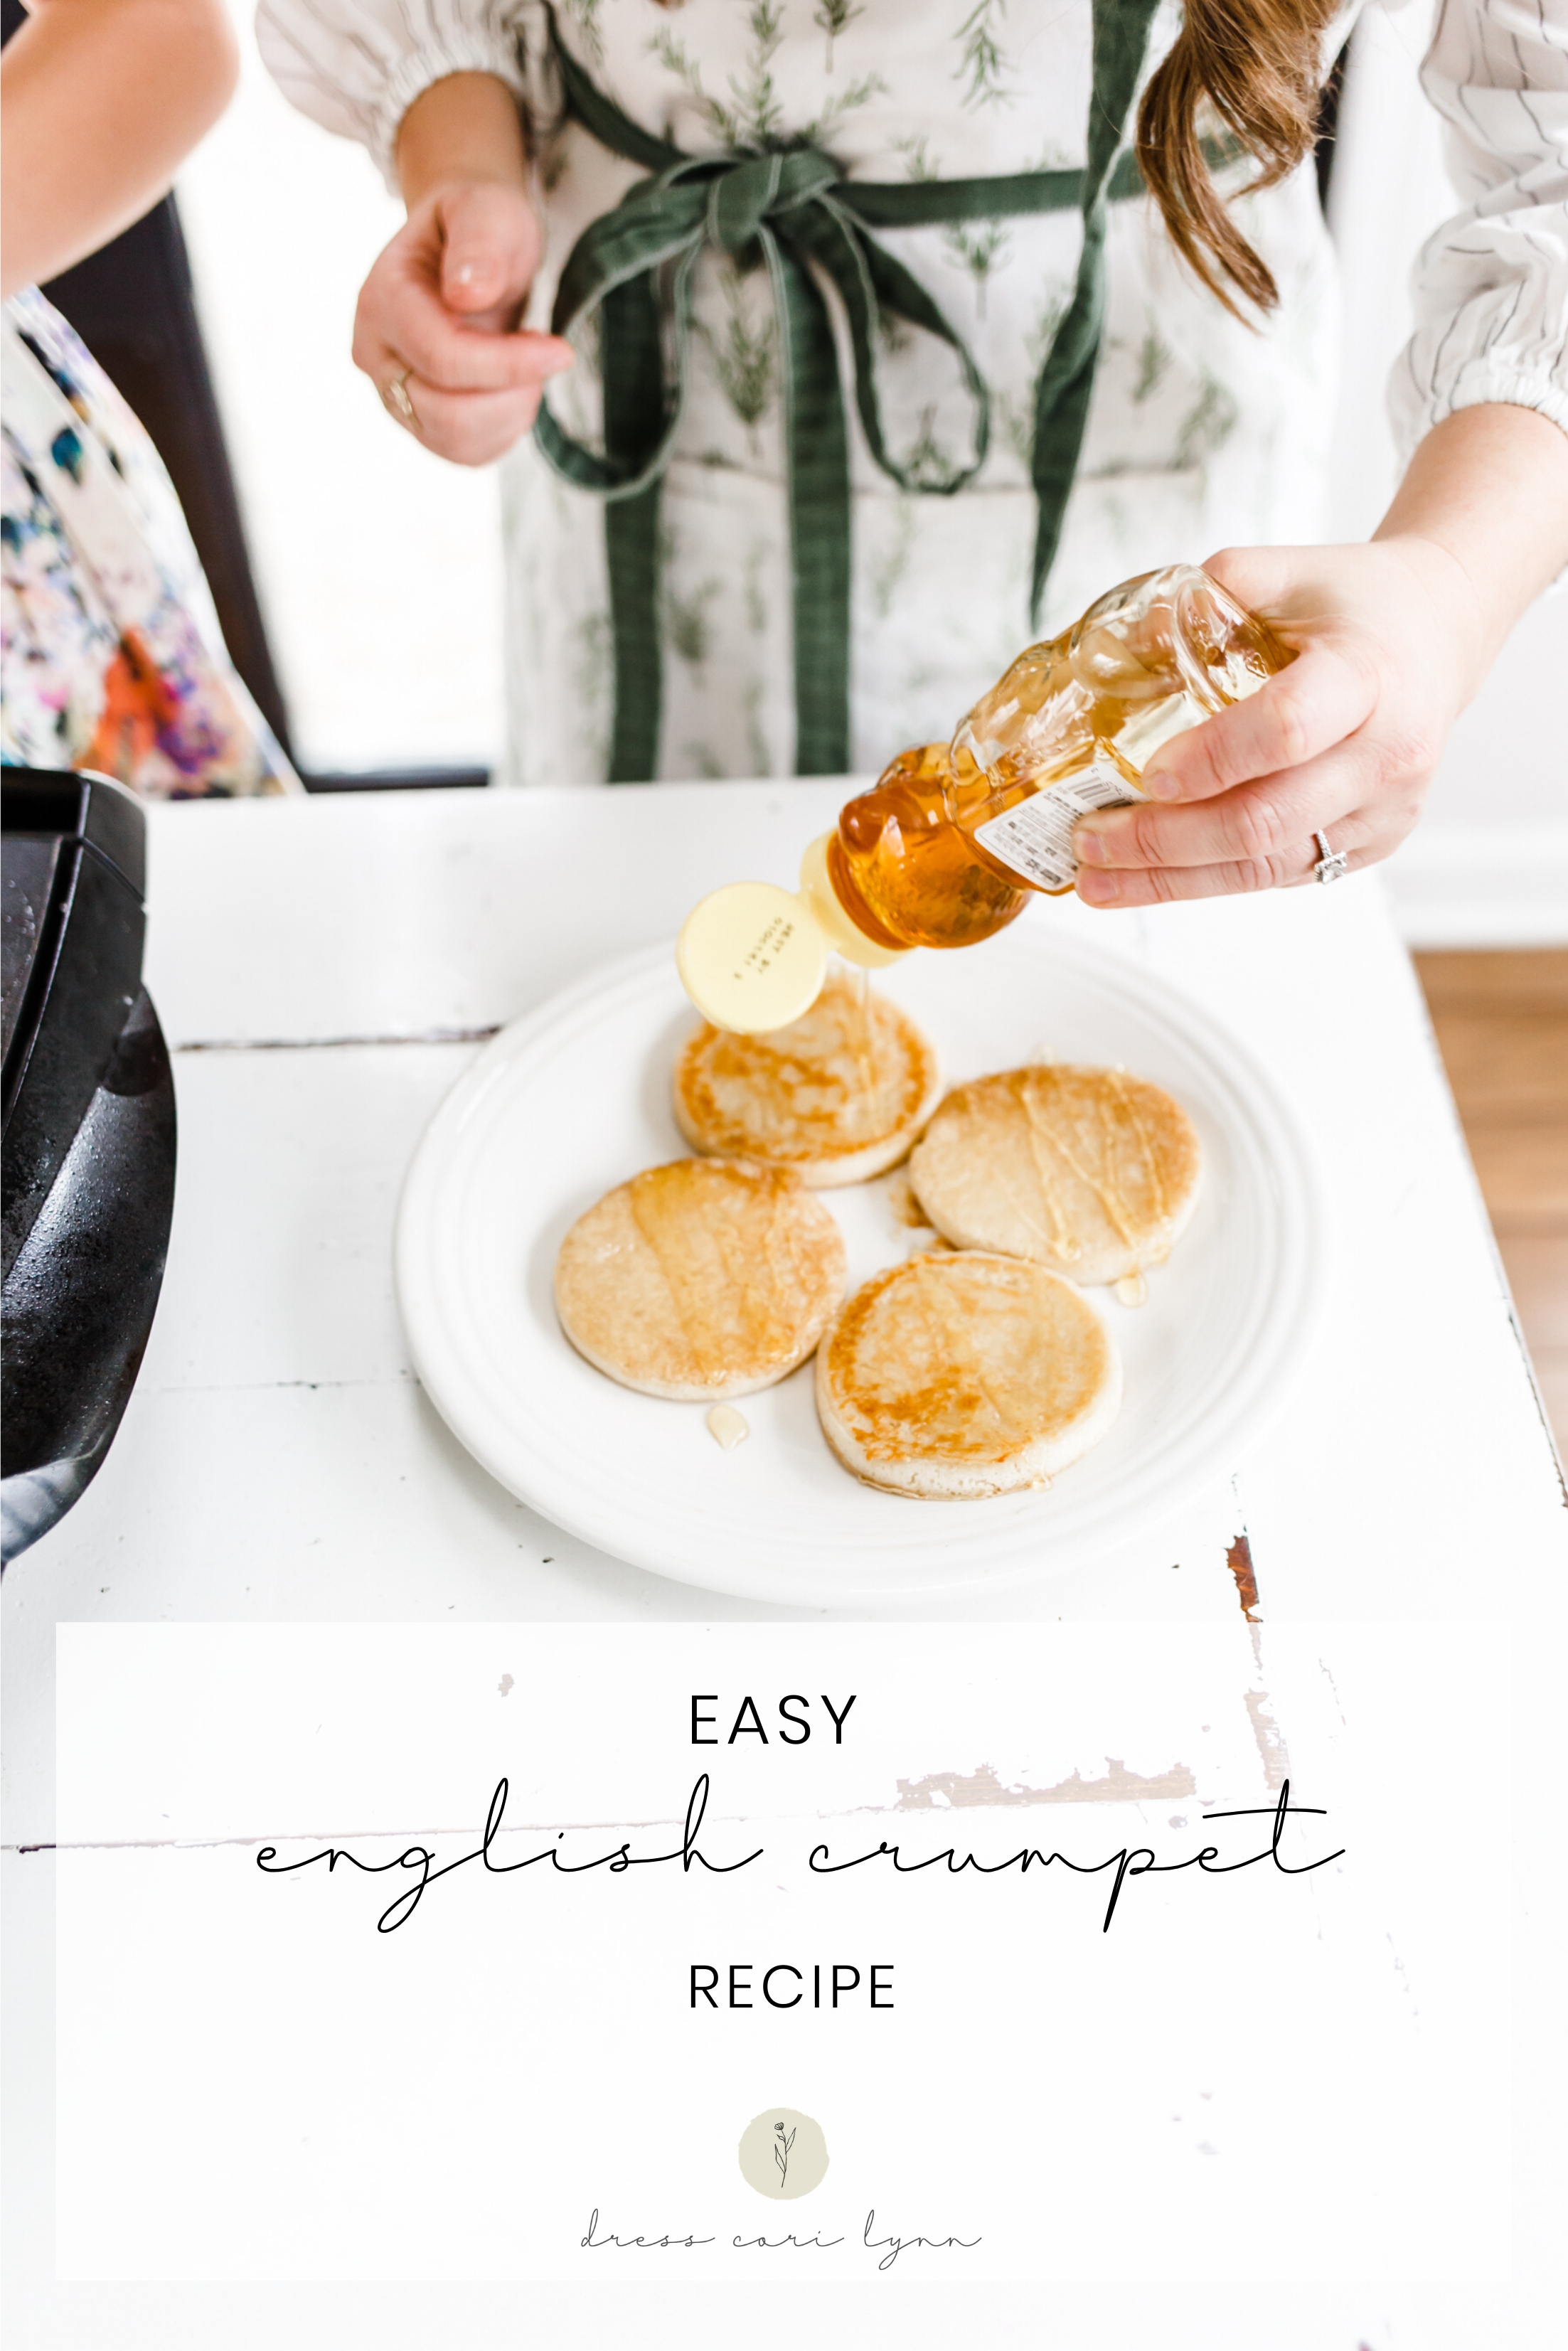 easy English crumpets recipe (with Hannah) - dress cori lynn